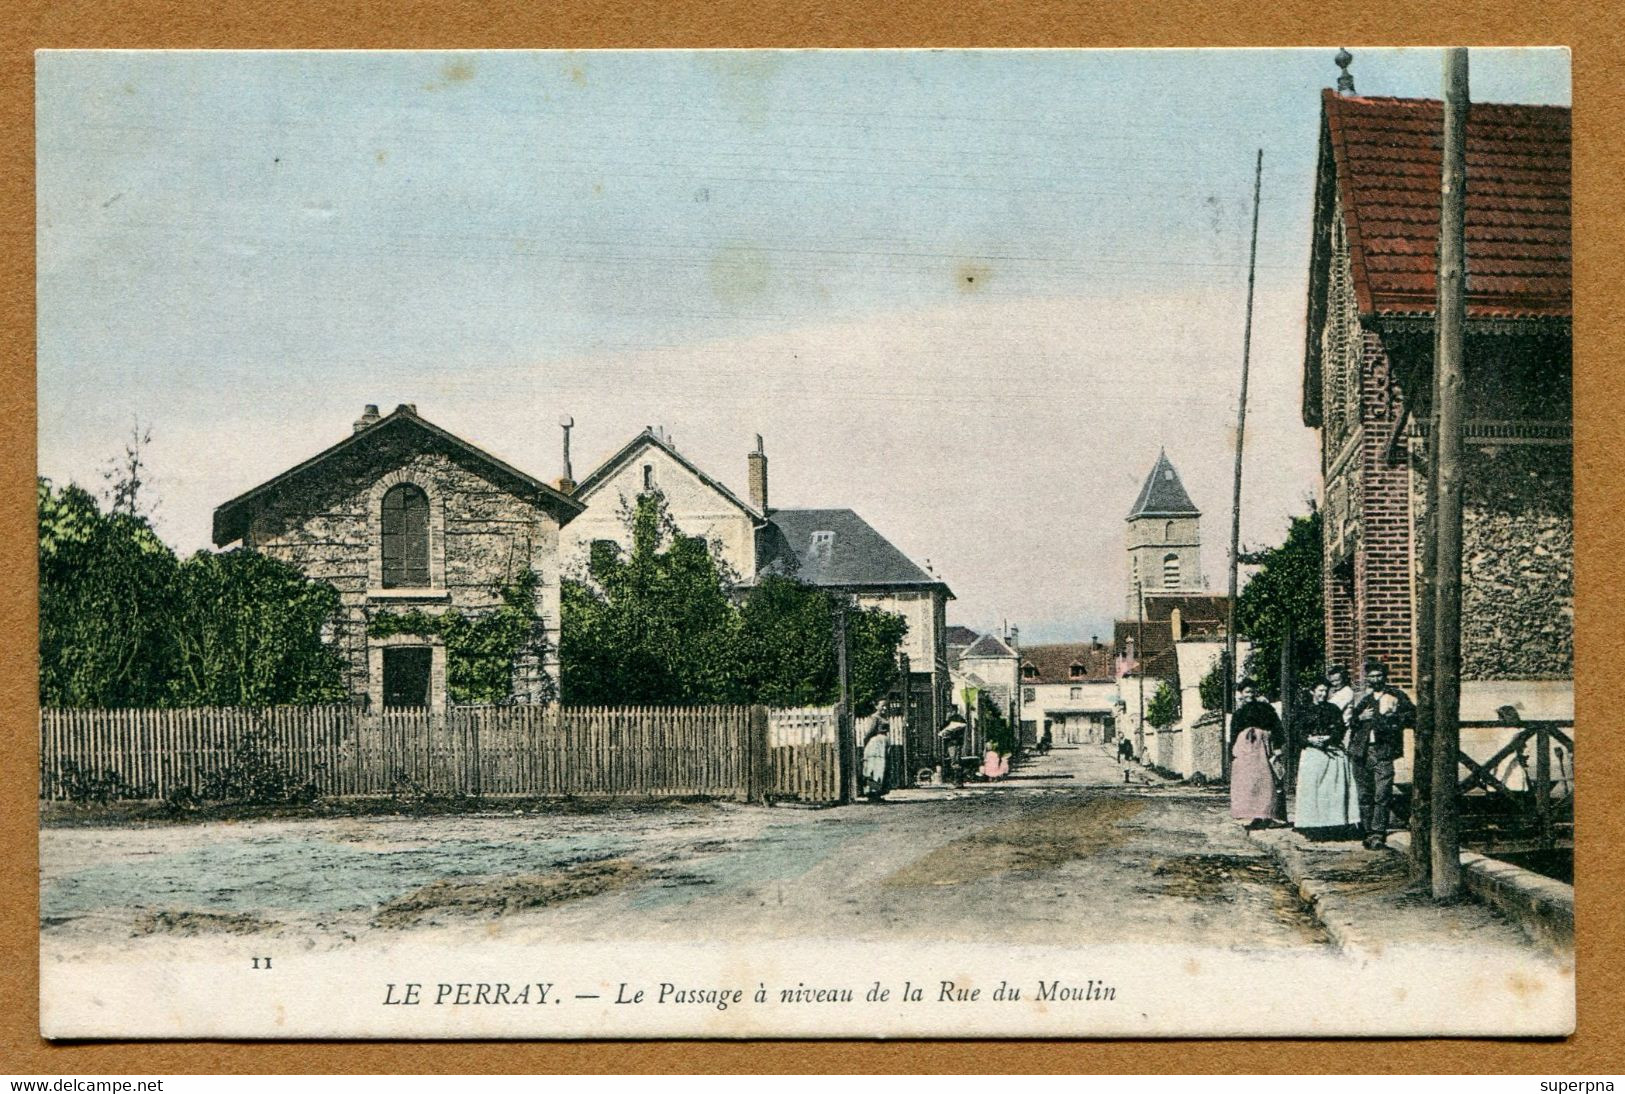 LE PERRAY (78) : " RUE DU MOULIN - LE PASSAGE A NIVEAU " - Le Perray En Yvelines